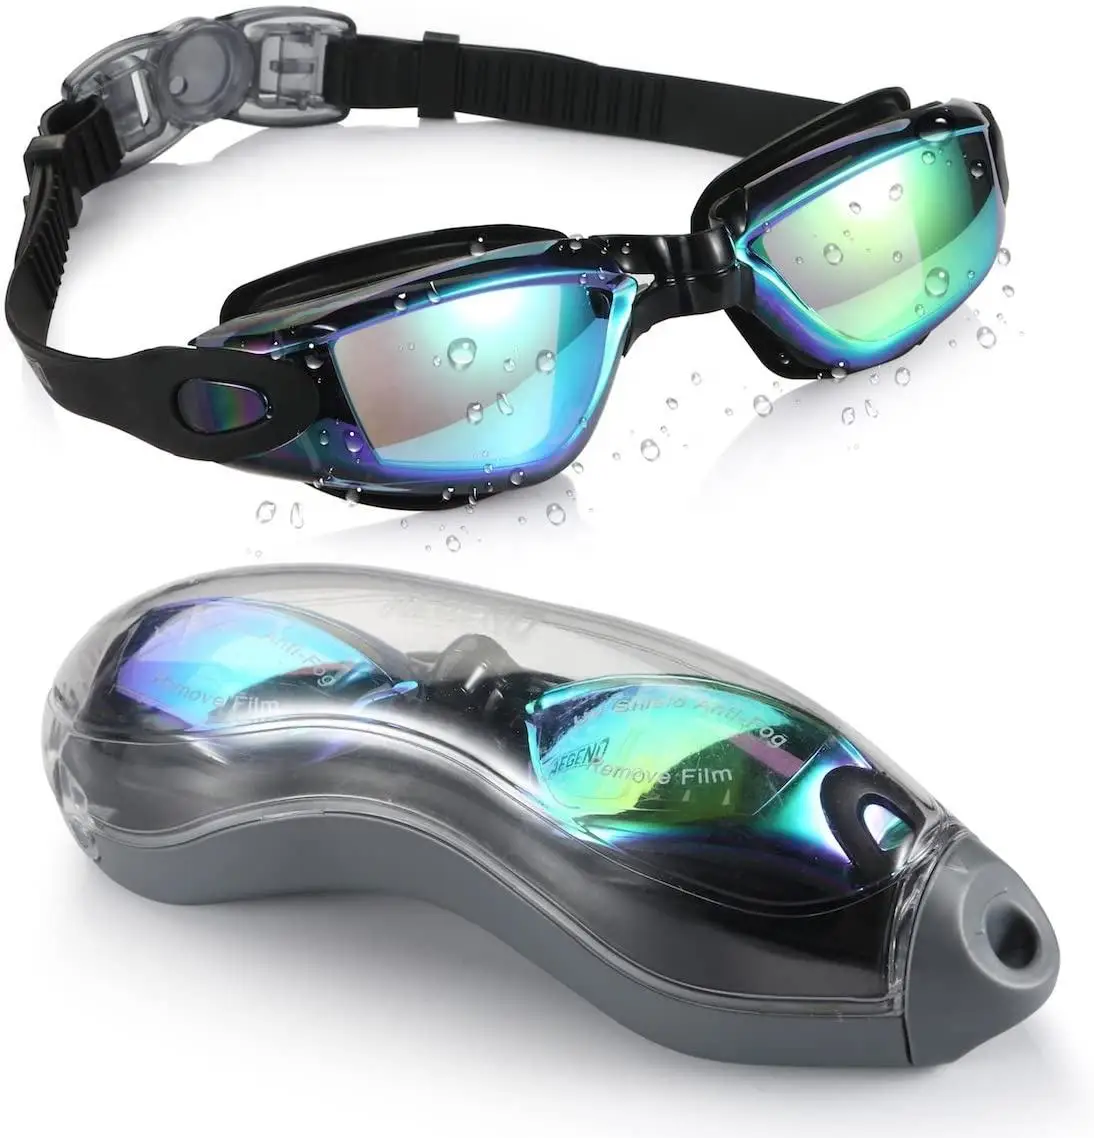 Hot Sale Swim Goggles, Swimming Goggles No Leaking Anti Fog UV Protection Triathlon Swim Glasses with Protection Case